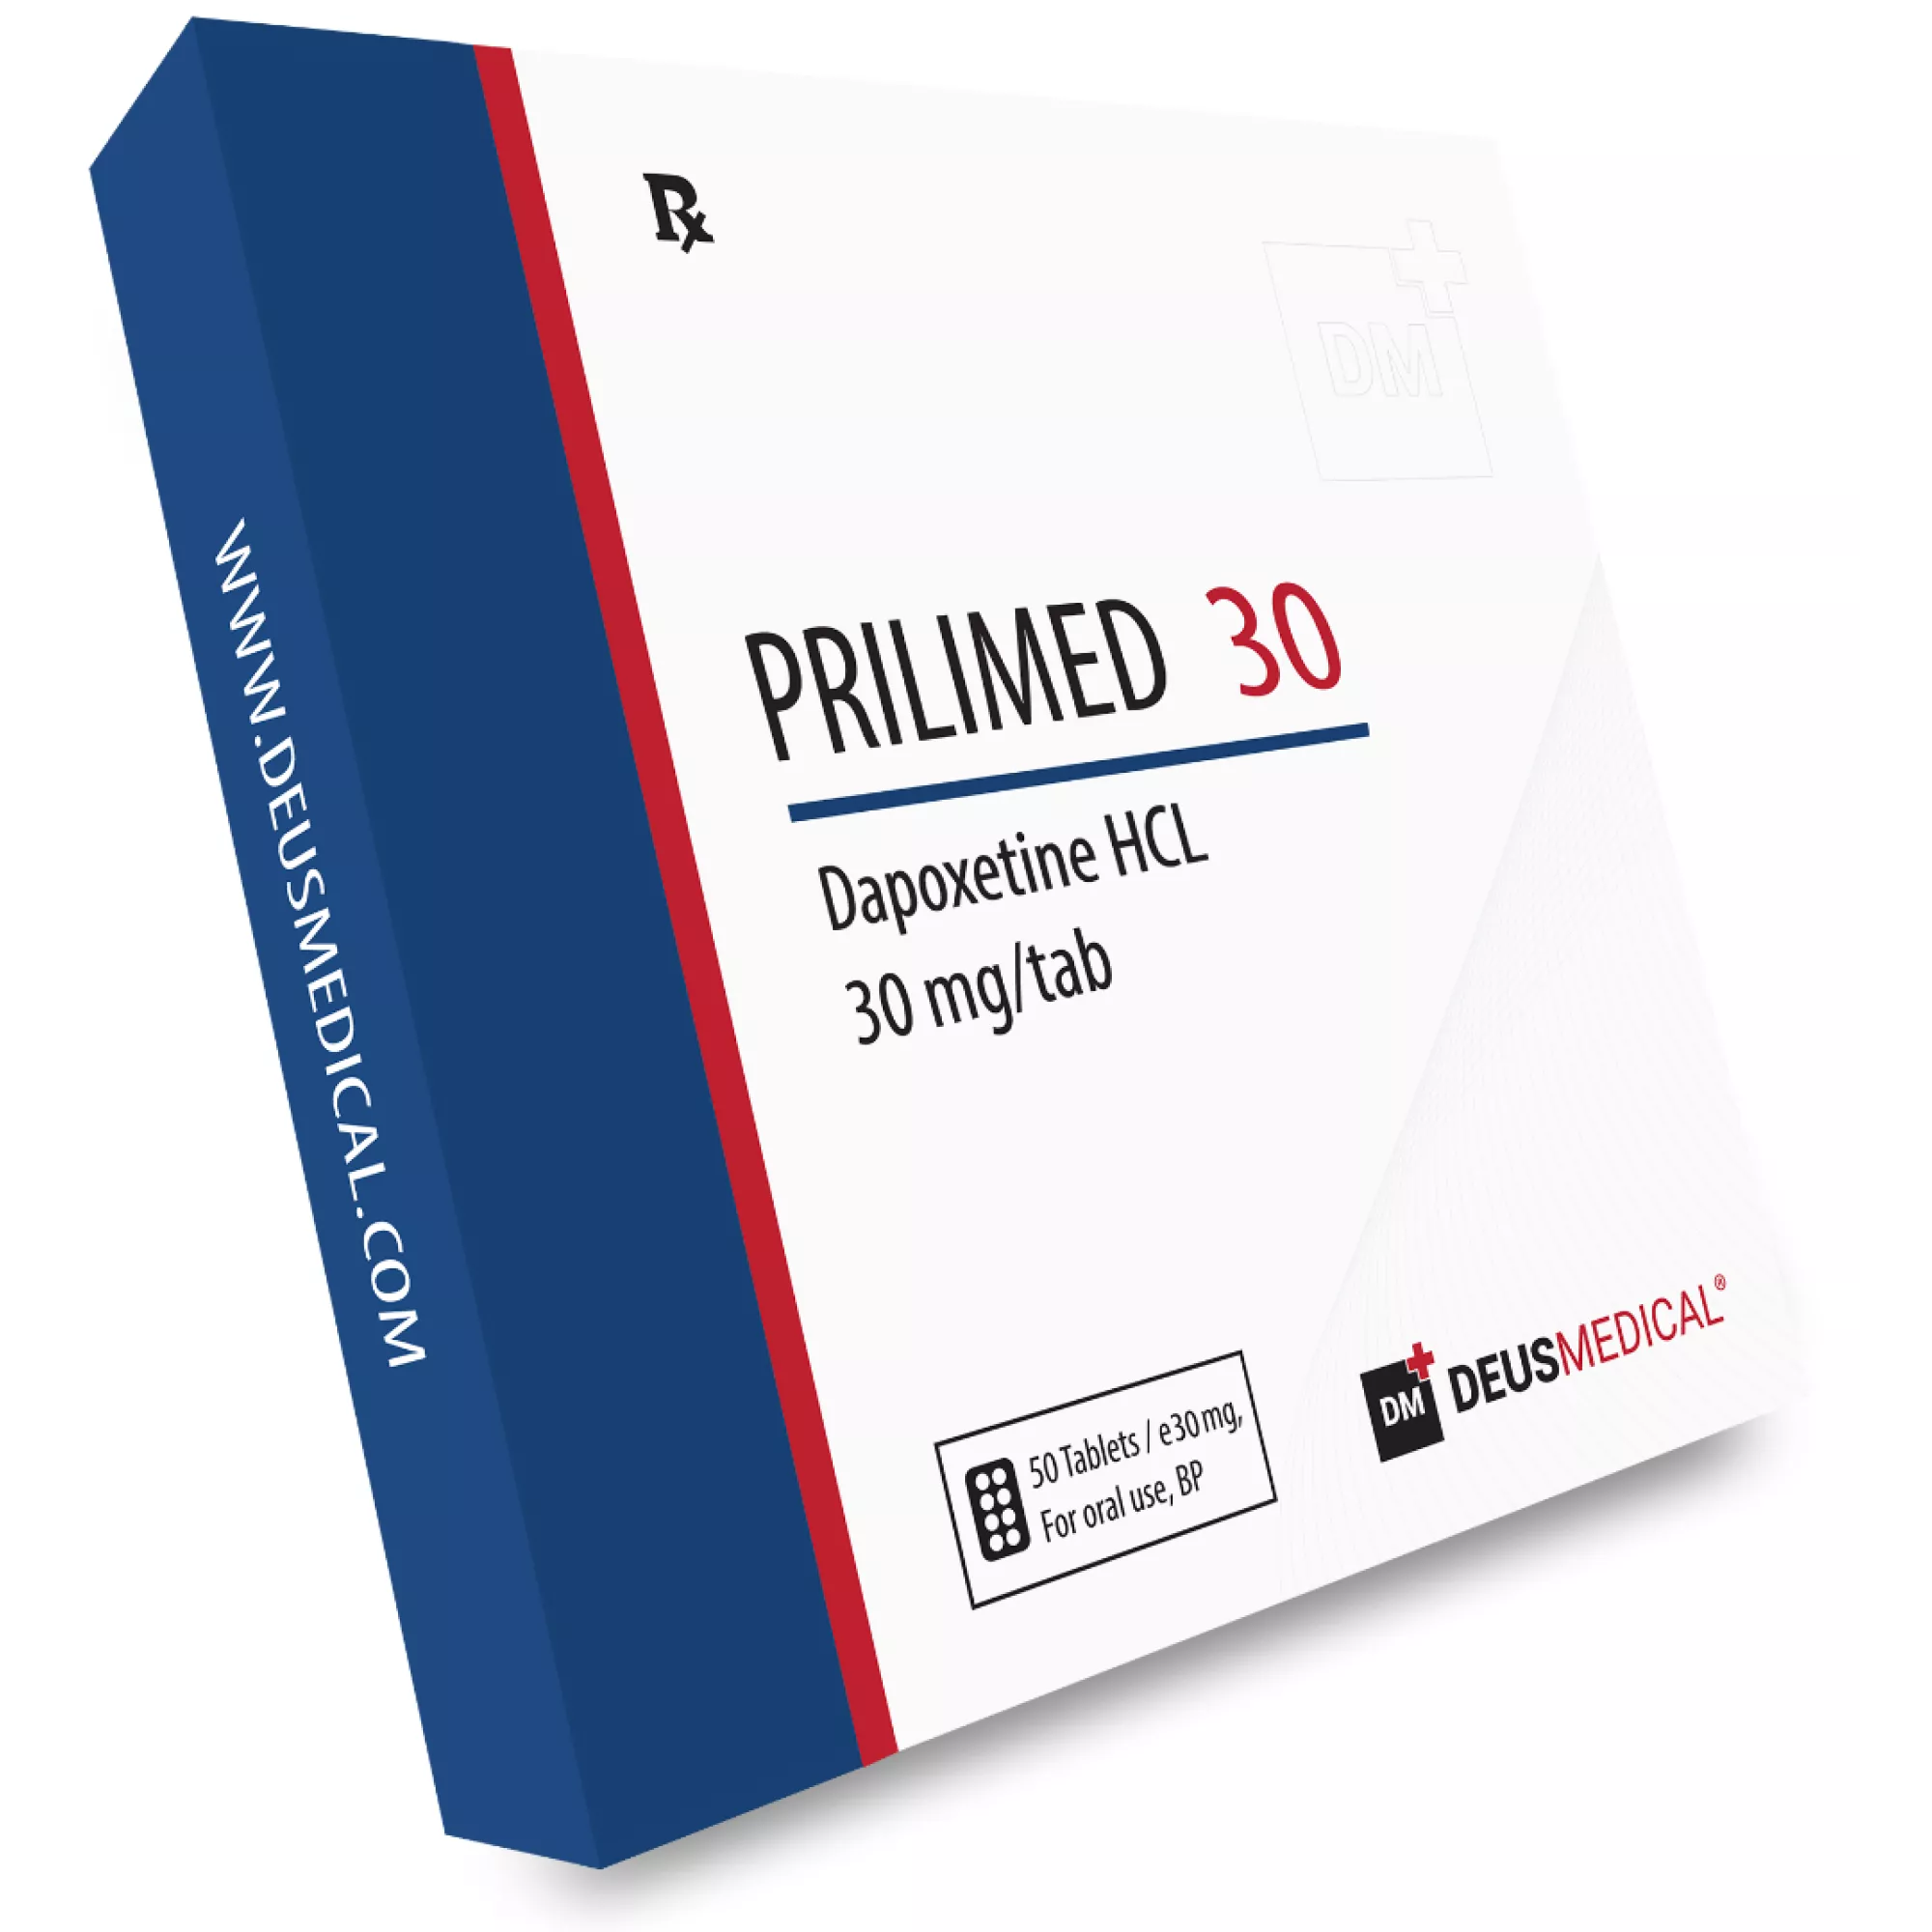 PRILIMED 30 (Dapoxetine HCL), Deus Medical, Buy Steroids Online - www.deuspower.shop